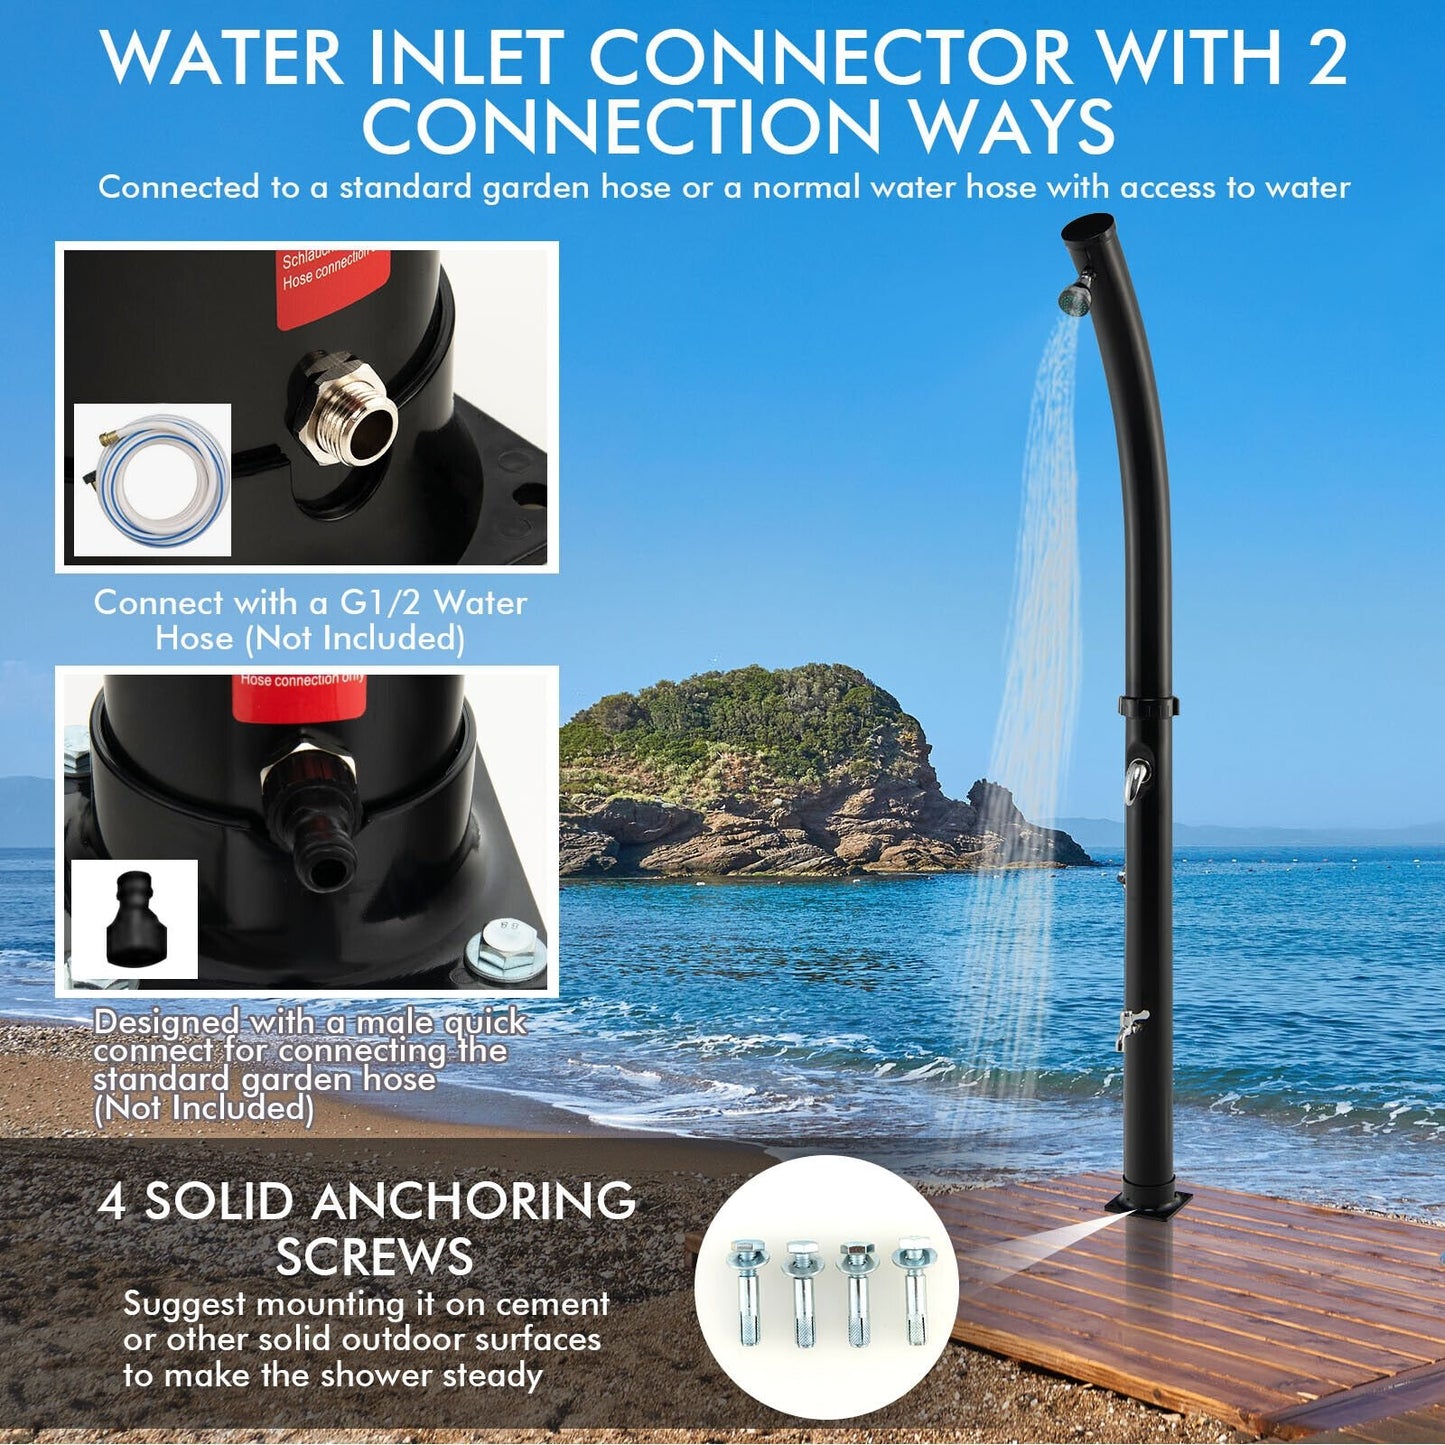 7.2 Feet Solar-Heated Shower with 360° Rotating Shower Head, Black